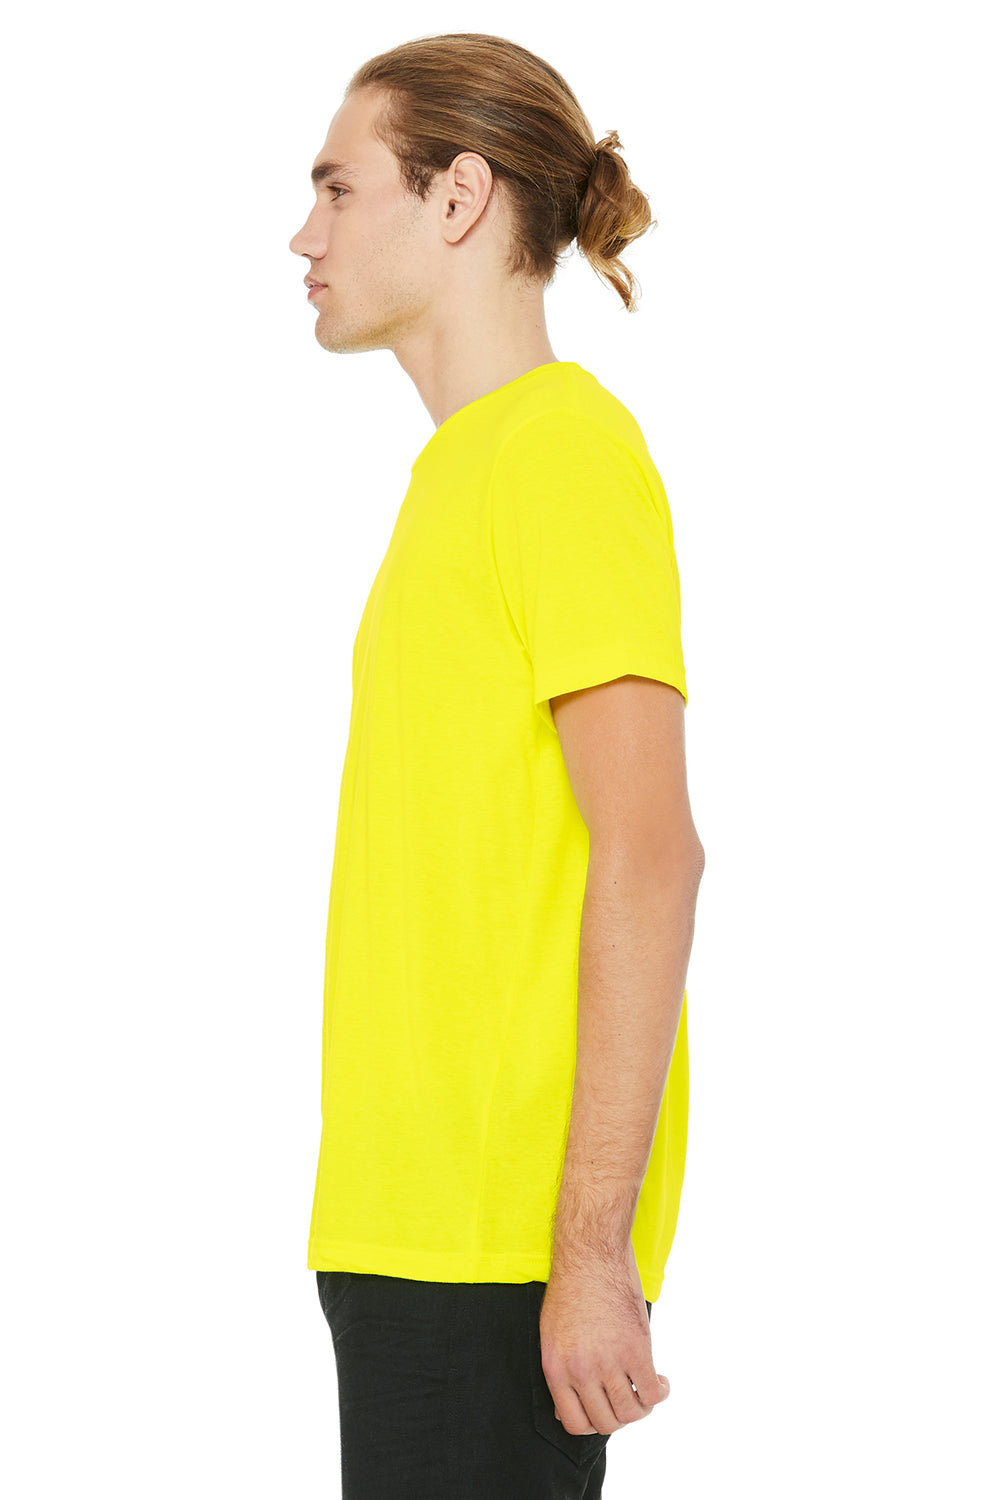 Bella + Canvas 3650 Mens Short Sleeve Crewneck T-Shirt Neon Yellow Side